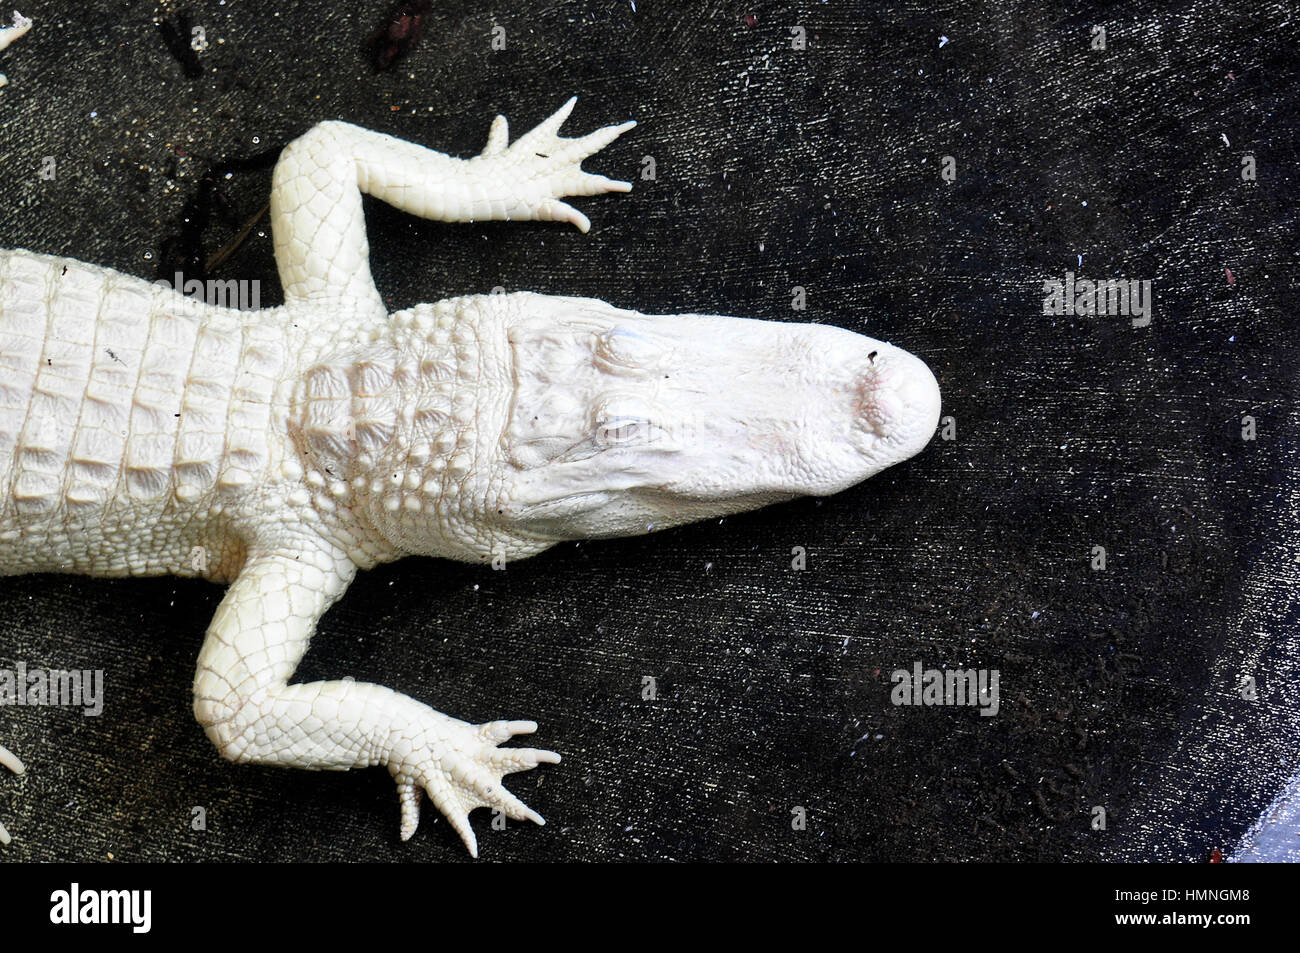 The alligators farm in Saint Augustine, Florida, has an albino crocodile. Stock Photo